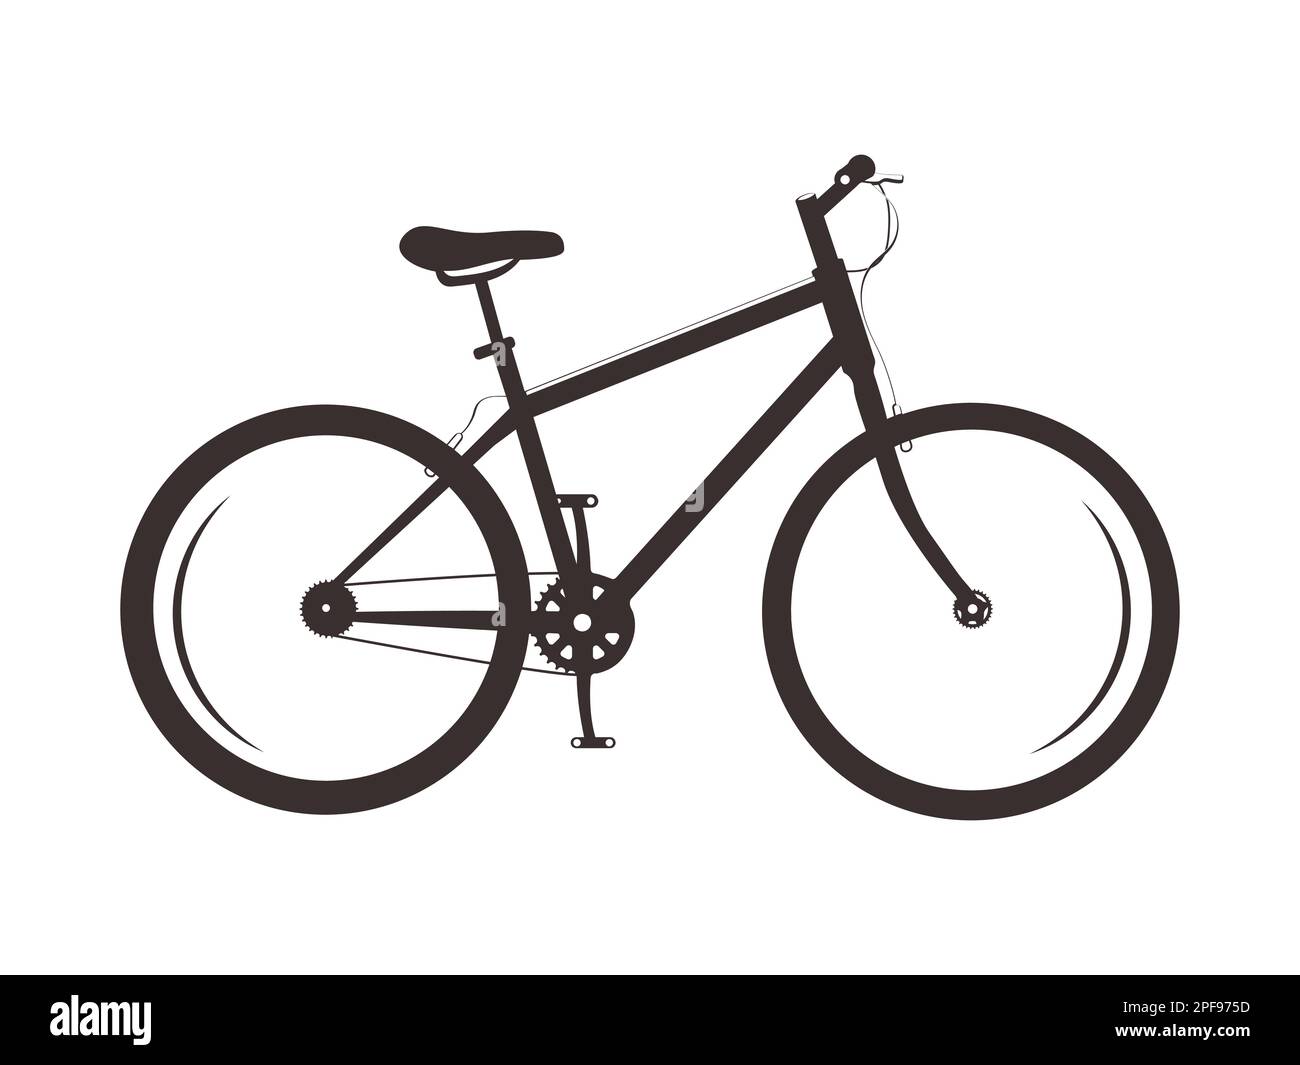 Bike racing Stock Vector Images - Alamy